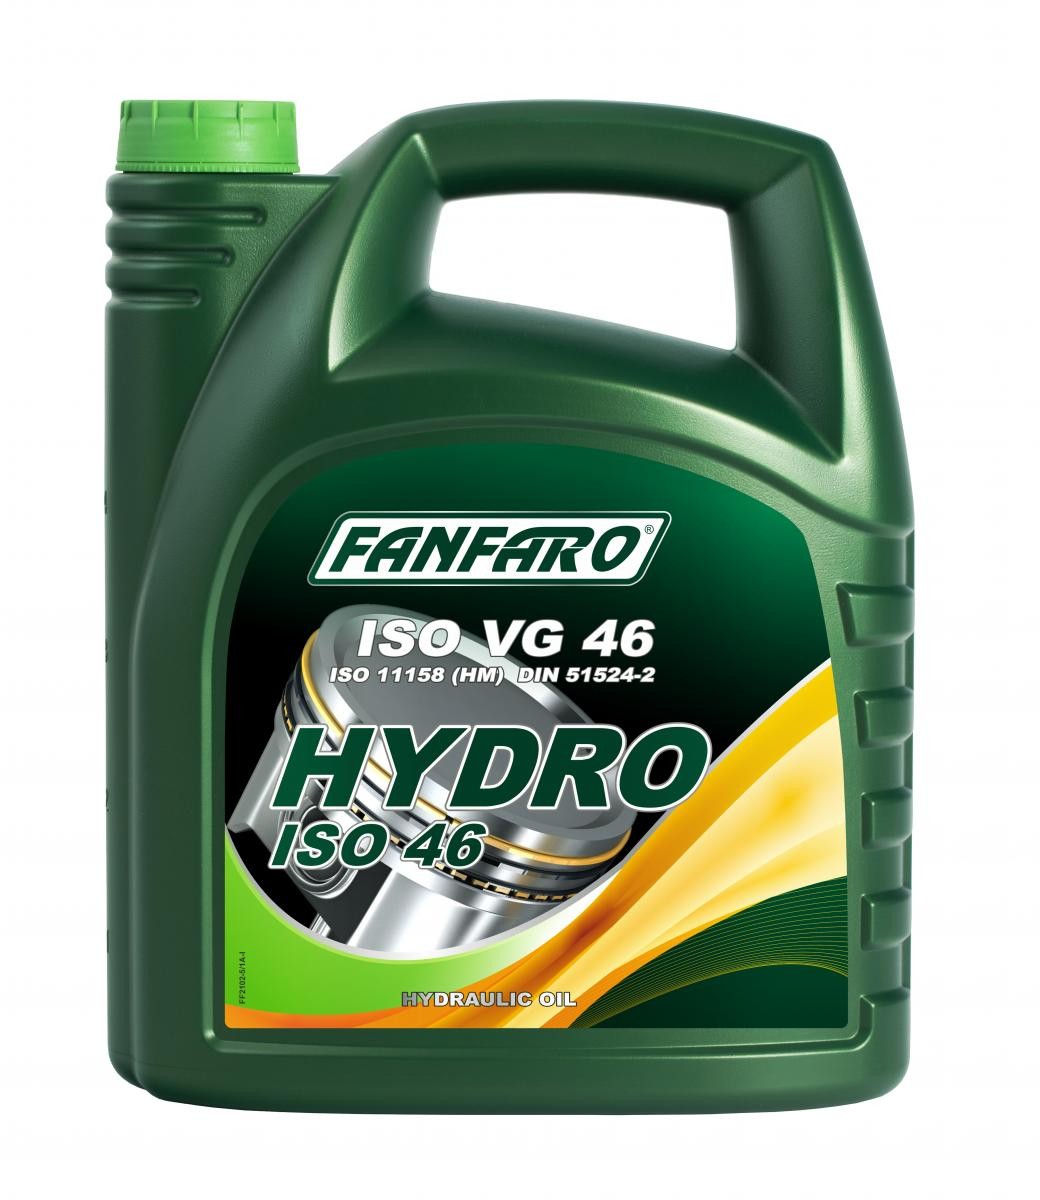 FF2102-5 FANFARO Hydraulic Oil - buy online